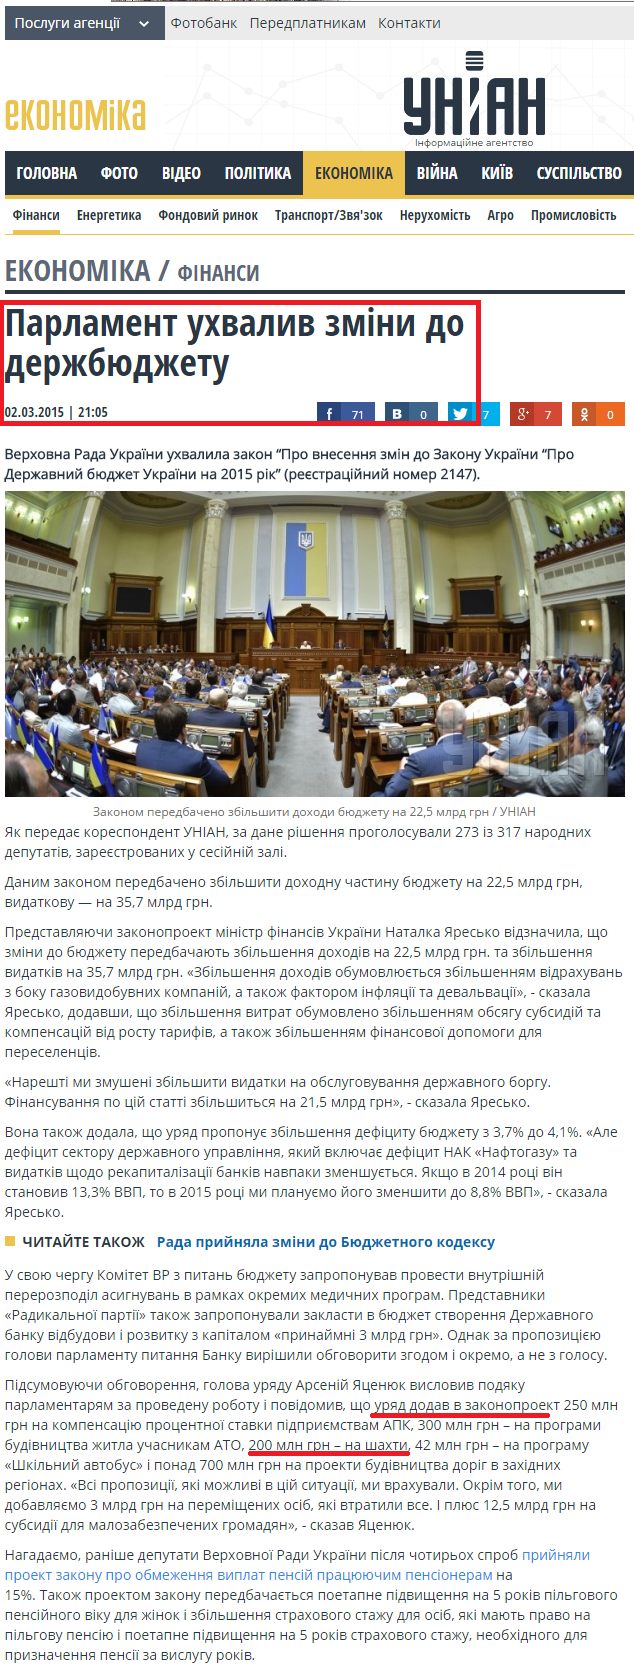 http://economics.unian.ua/finance/1050749-parlament-uhvaliv-zmini-do-derjbyudjetu-najivo.html